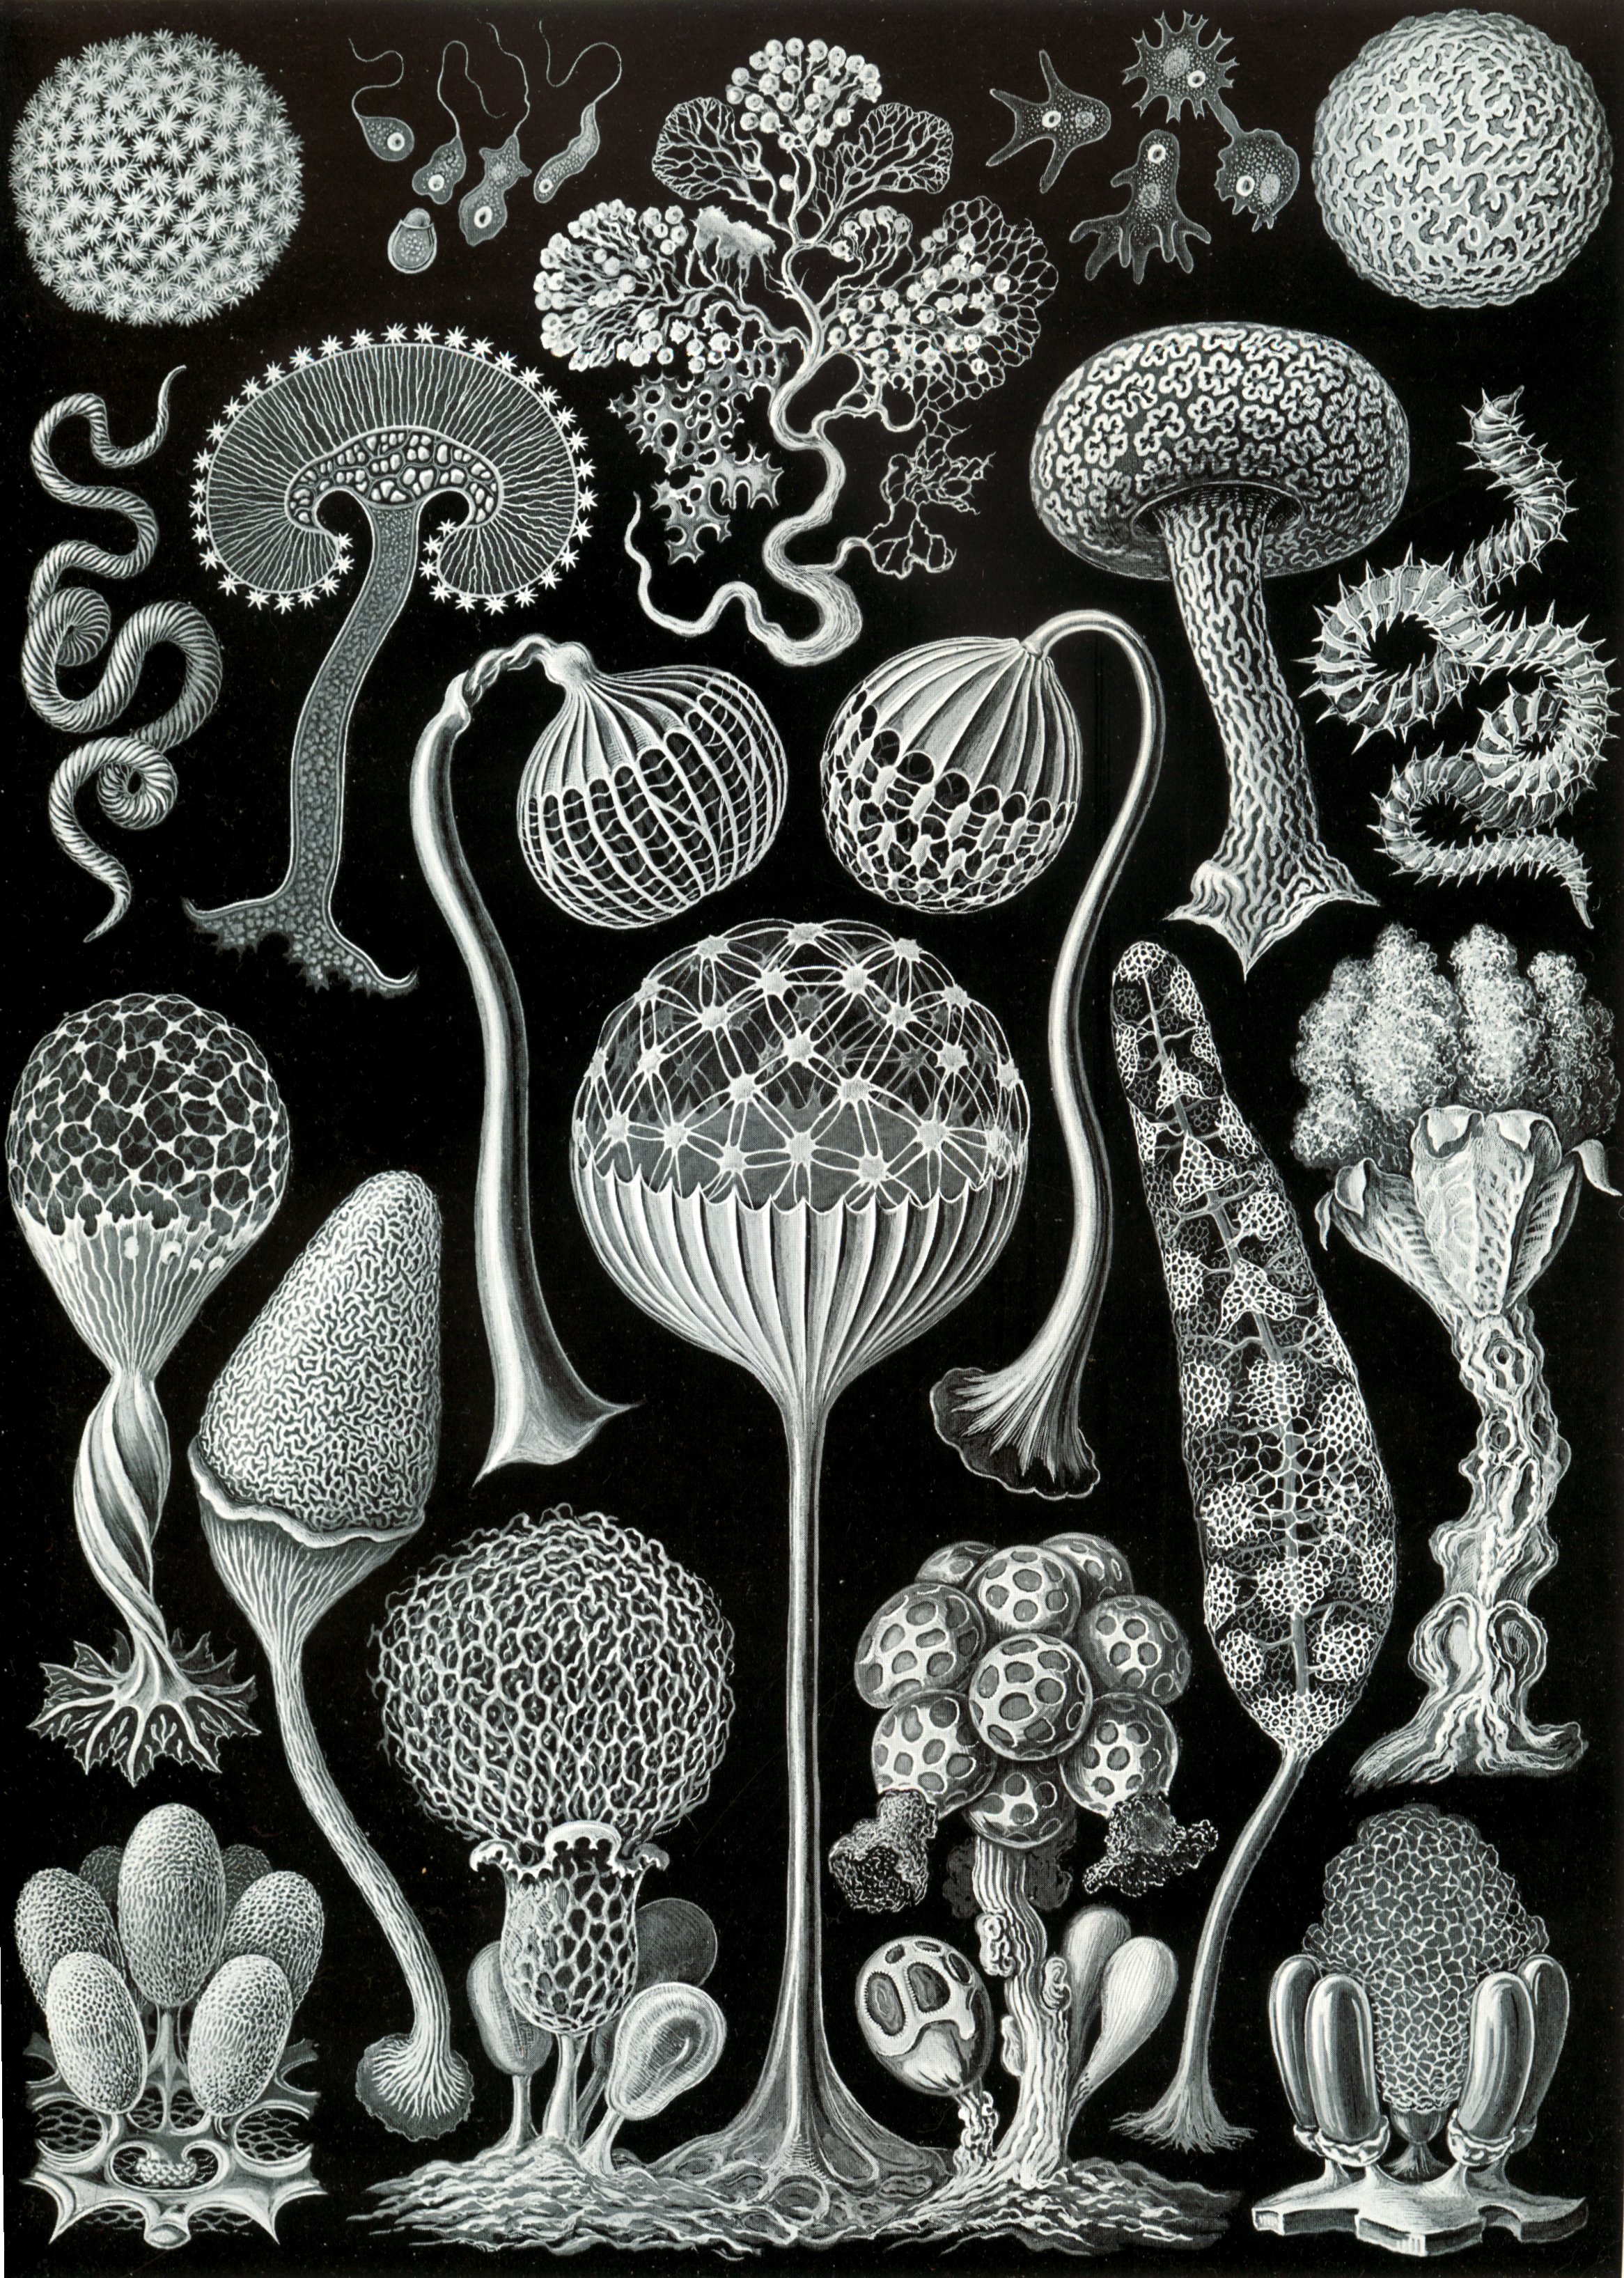 Slide molds. Credit: Ernst Haeckel [Public domain], via Wikimedia Commons